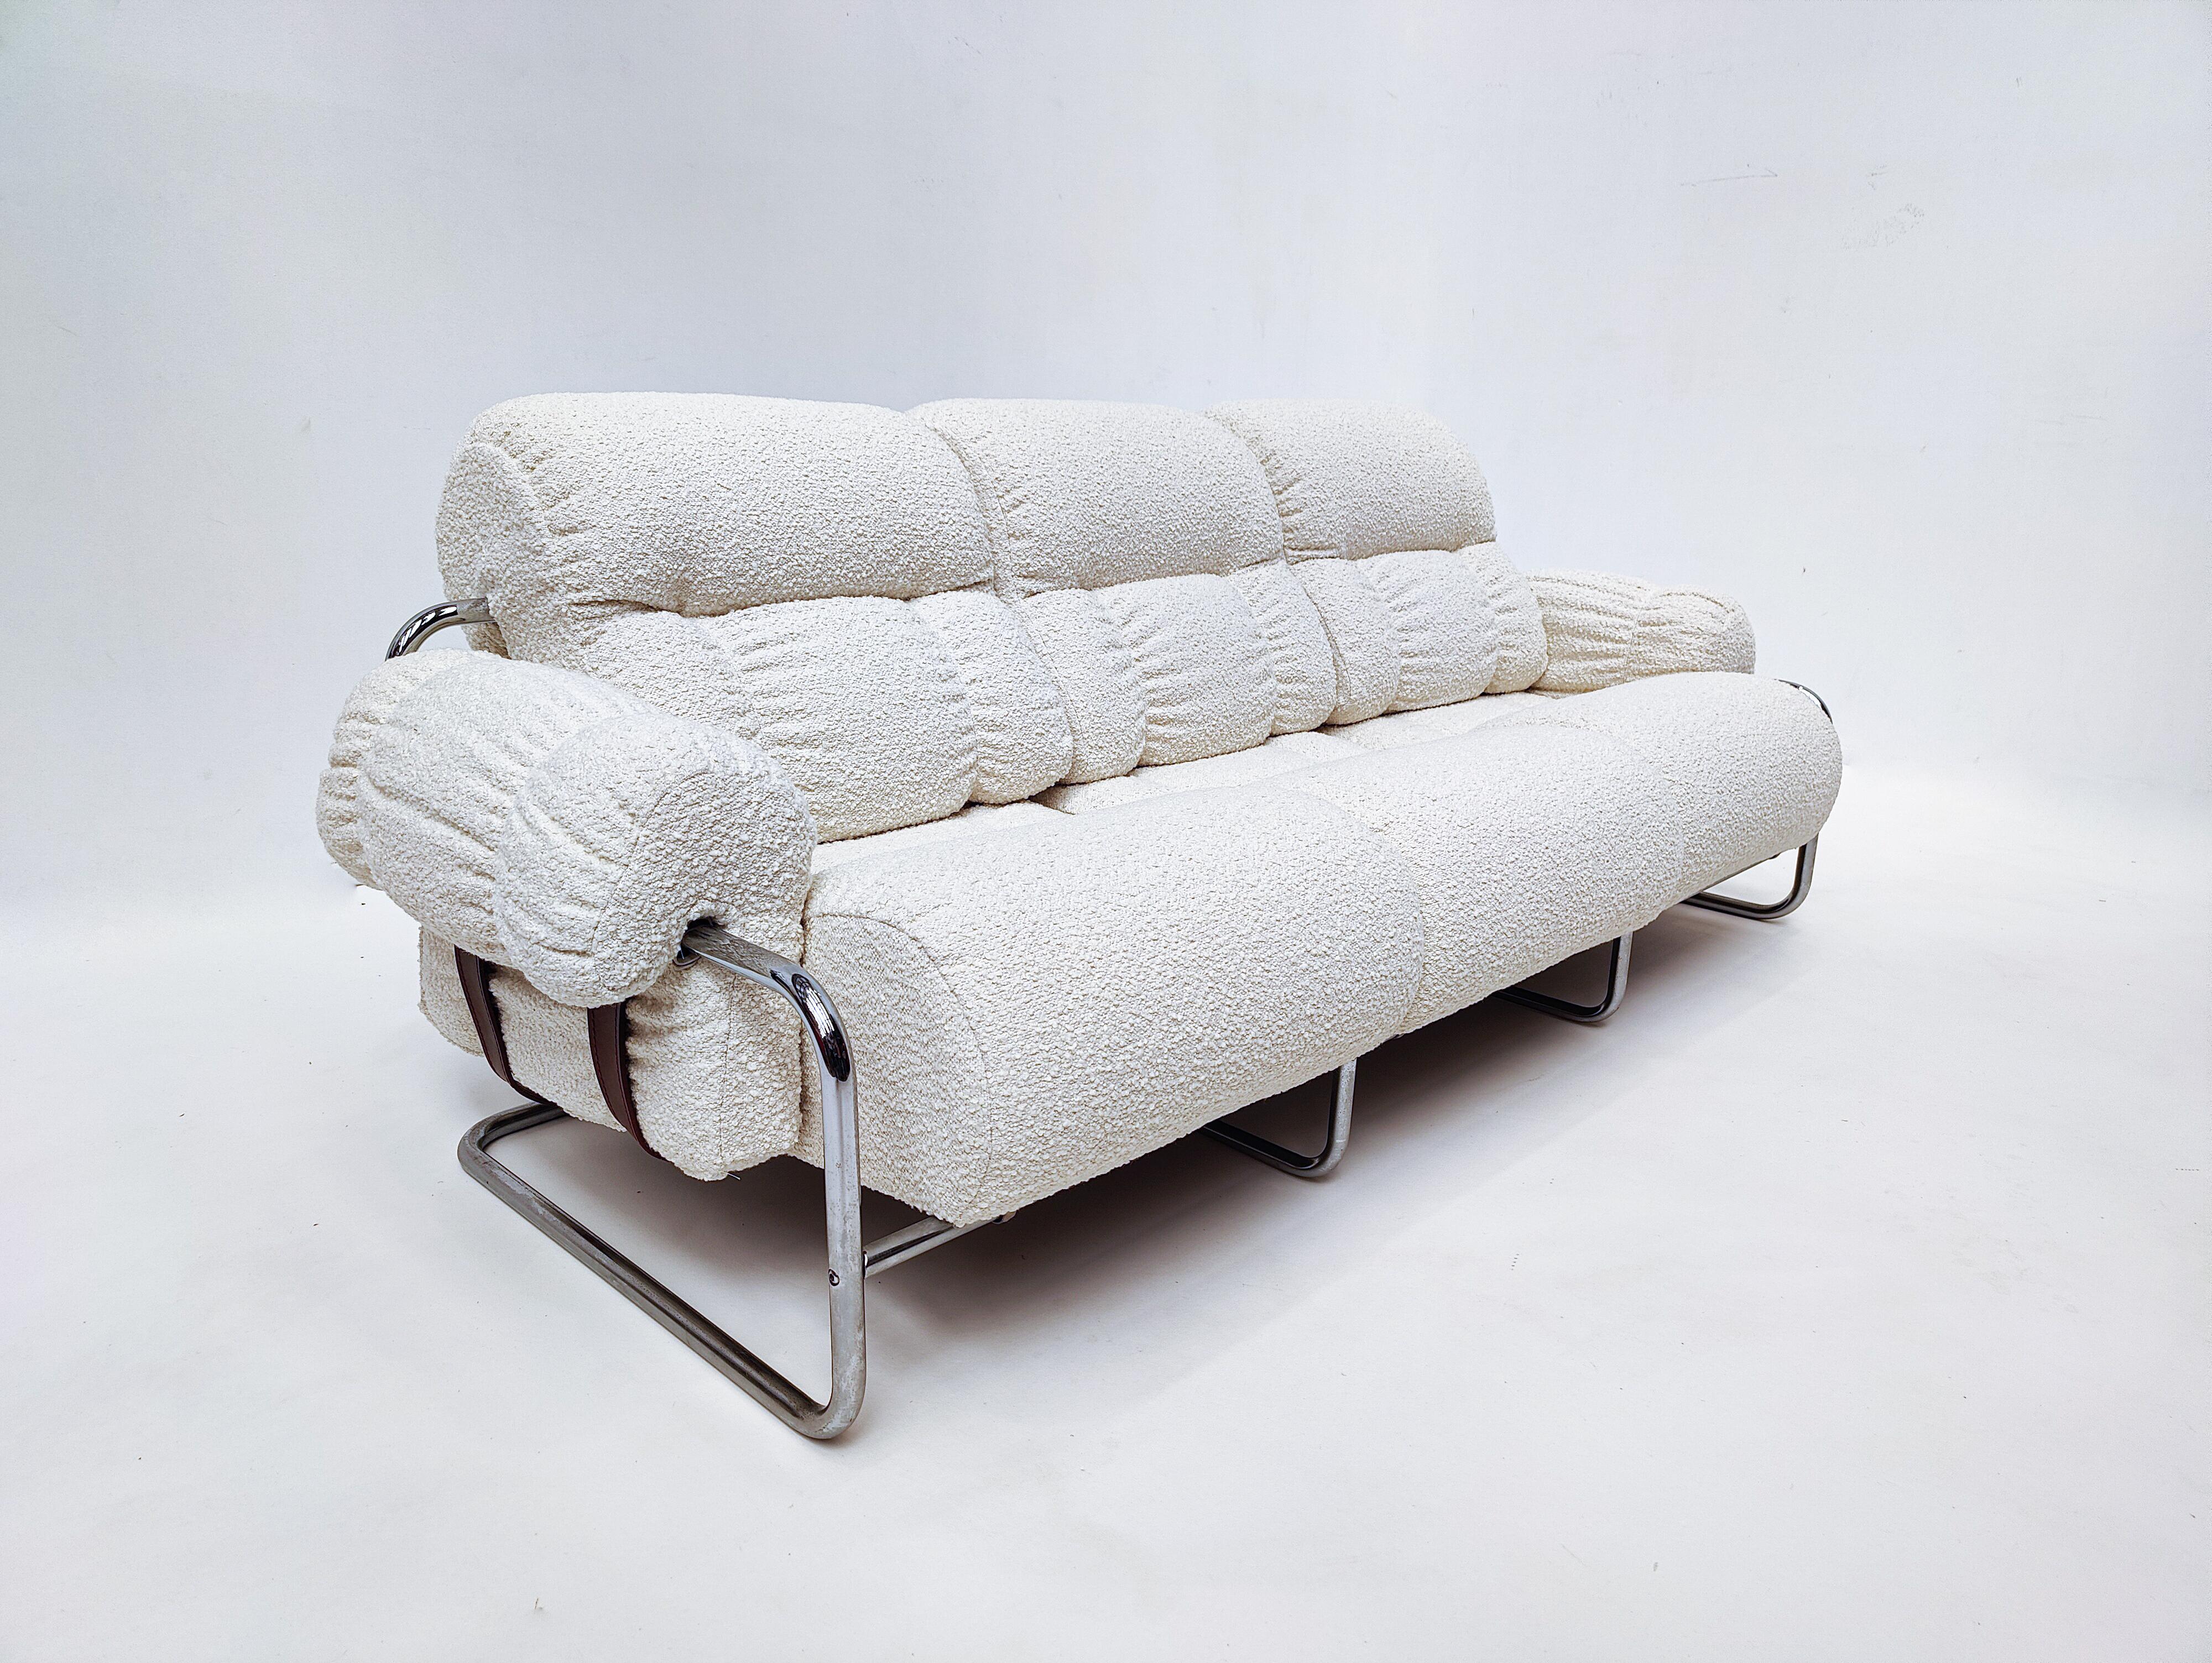 Mid-century sofa model “Tucroma” by Guido Faleschini - Italy 1970s.

Italian design, European design 

Condition : 
Good condition, new bouclette upholstery 

Designer Biography : 

